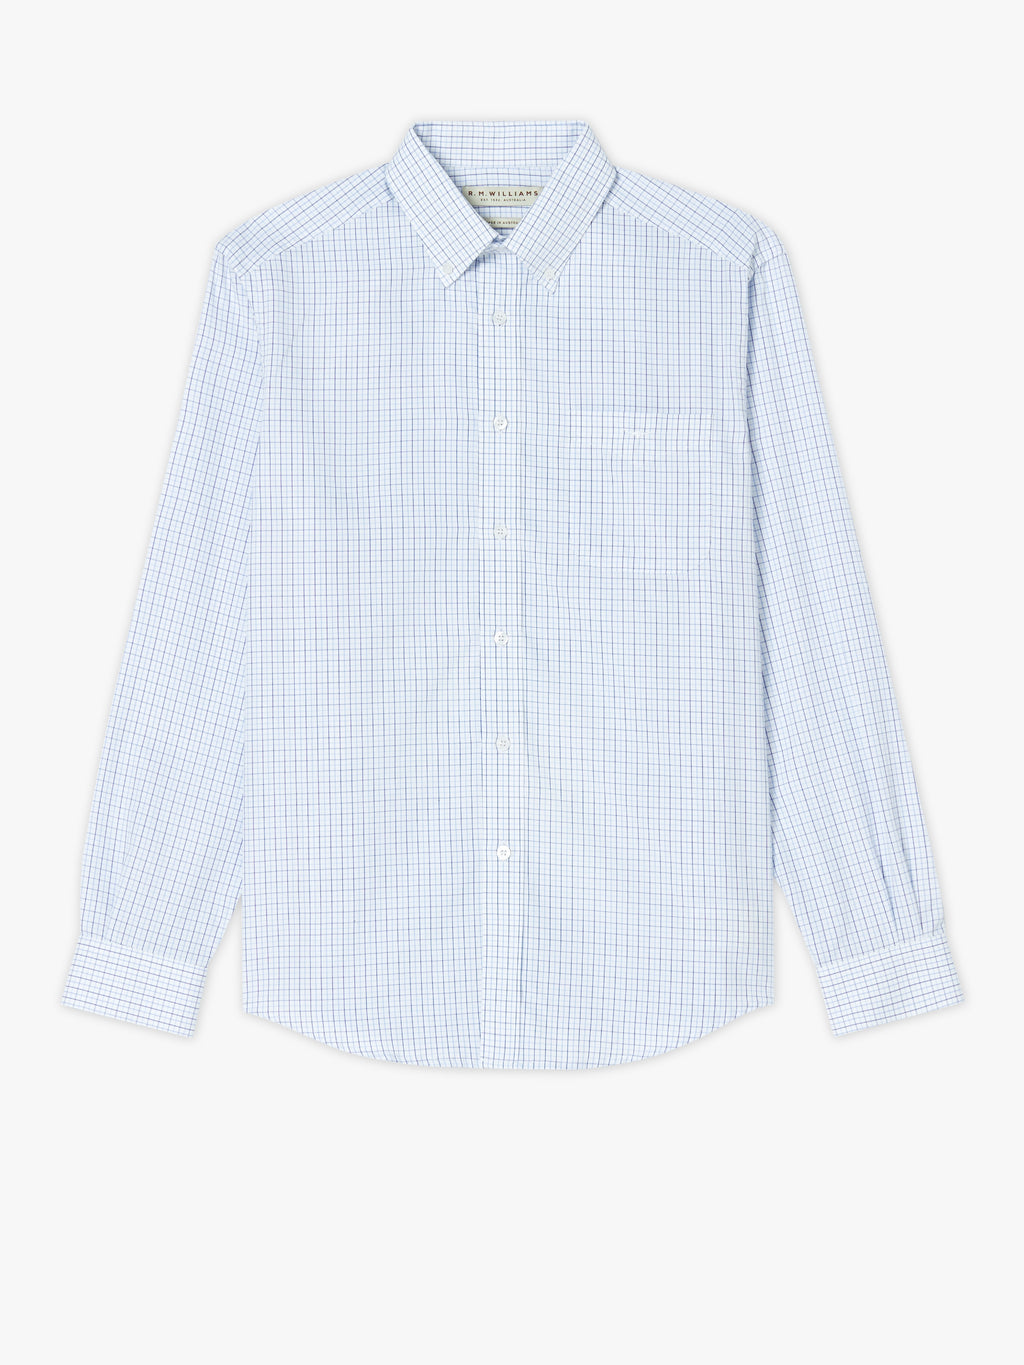 White/Blue Jervis Shirt, R.M.Williams Shirts